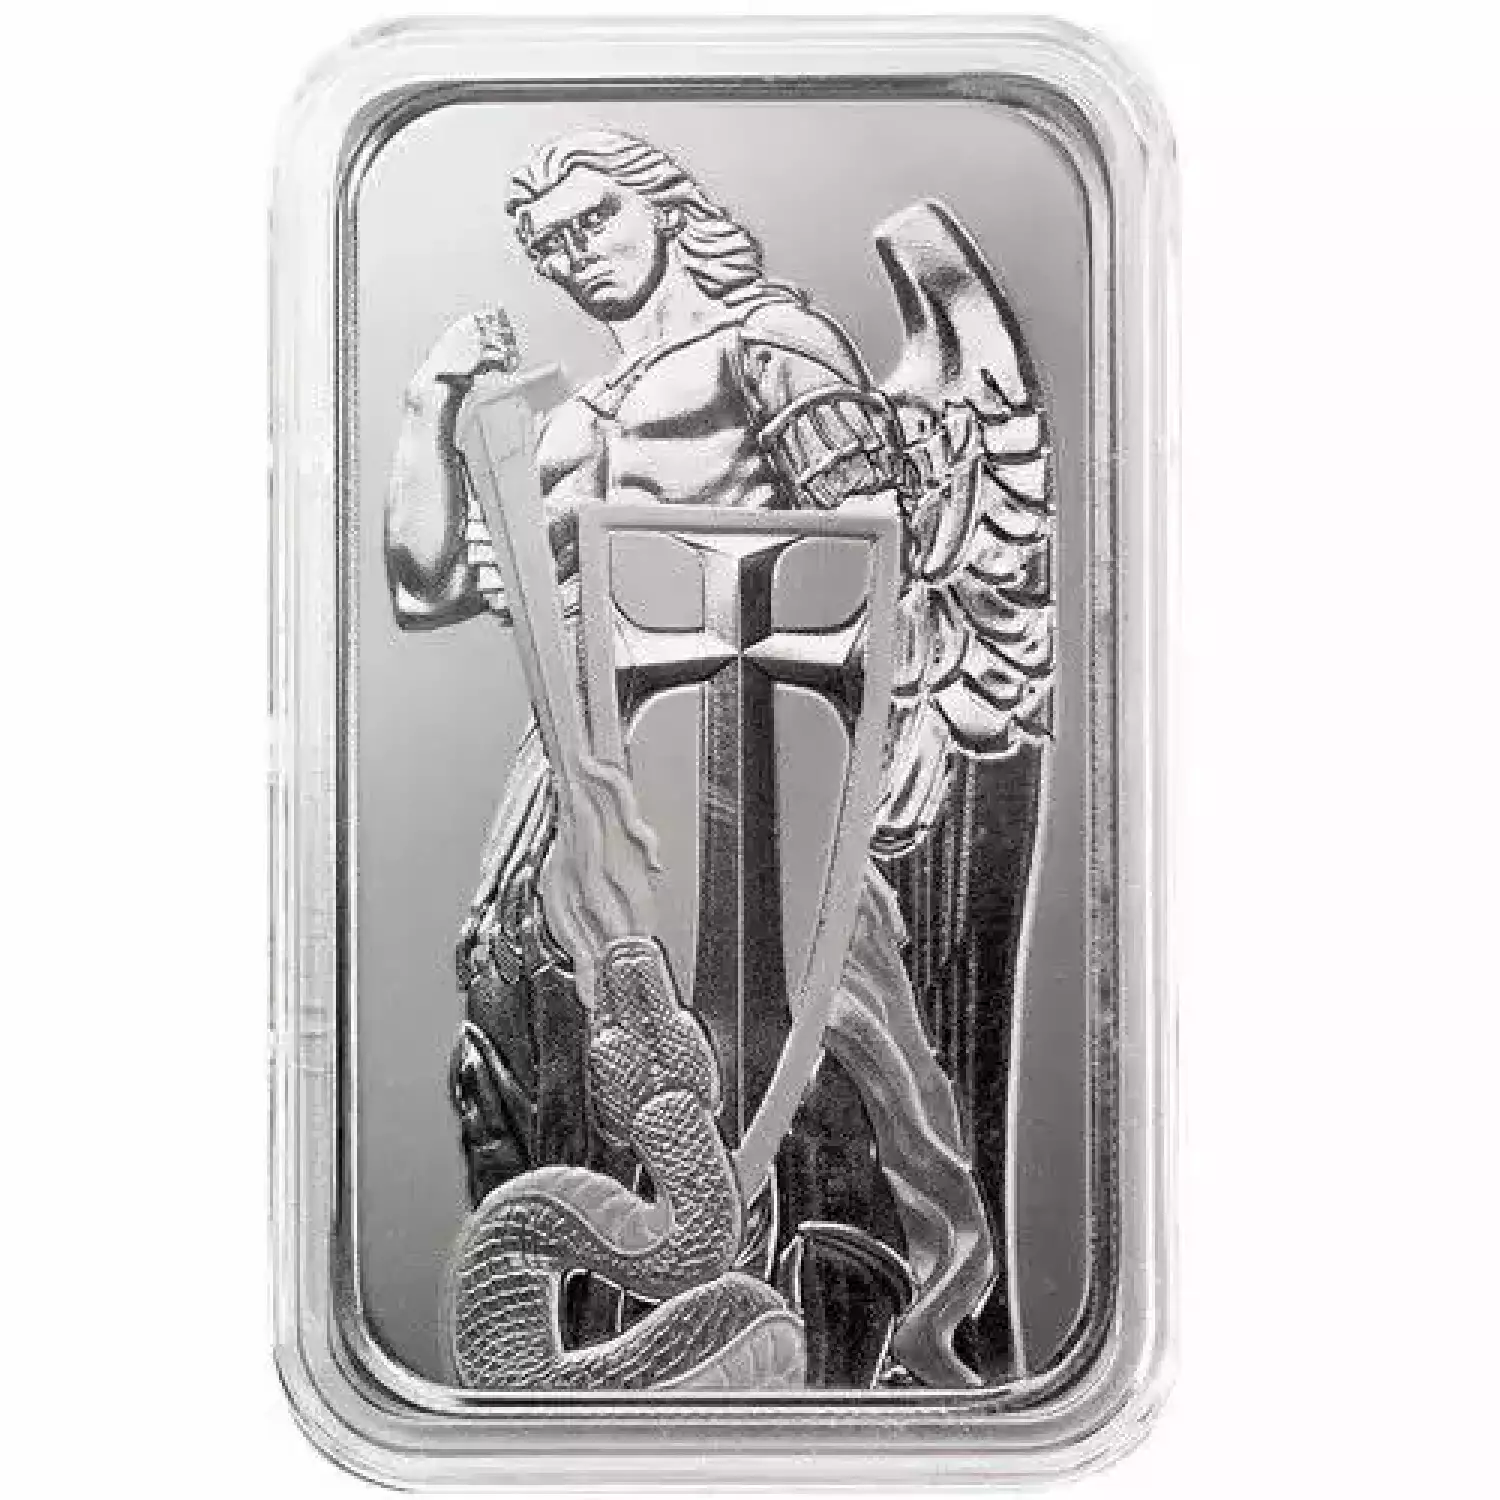 Archangel Michael 1 oz .999 Silver Bar - In Capsule (4)